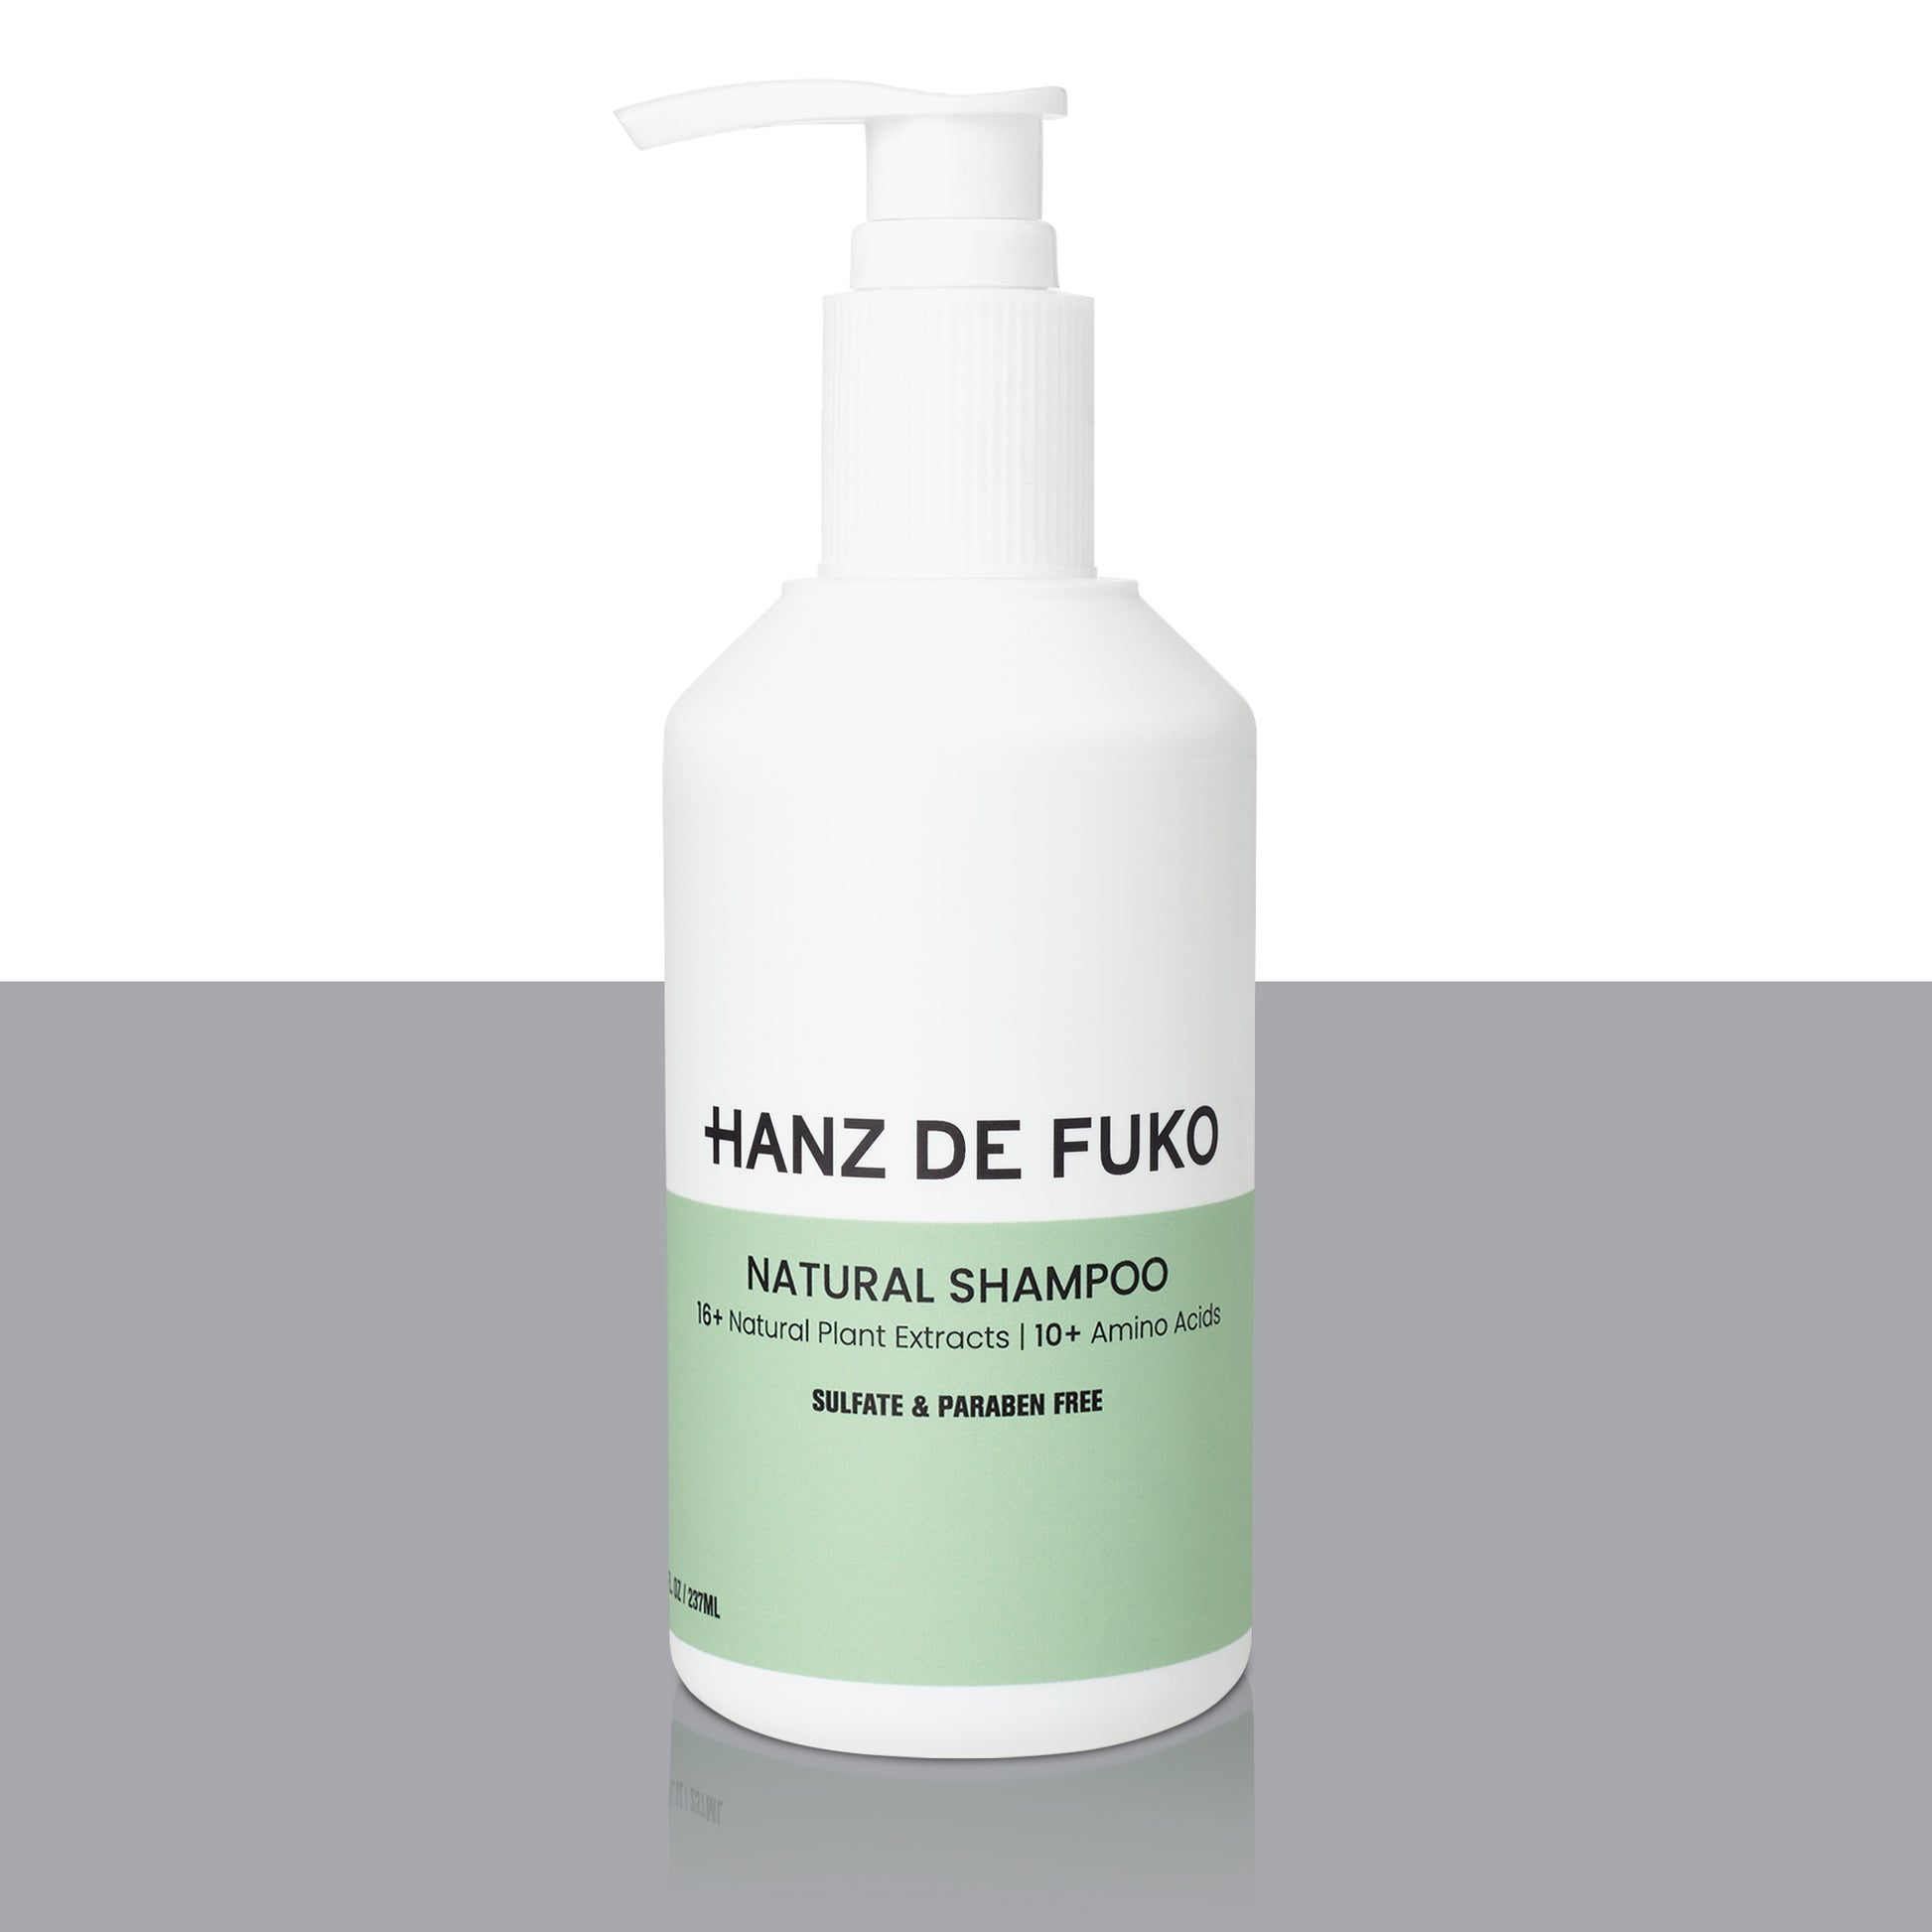 Hanz de Fuko - Natural Shampoo - The Panic Room